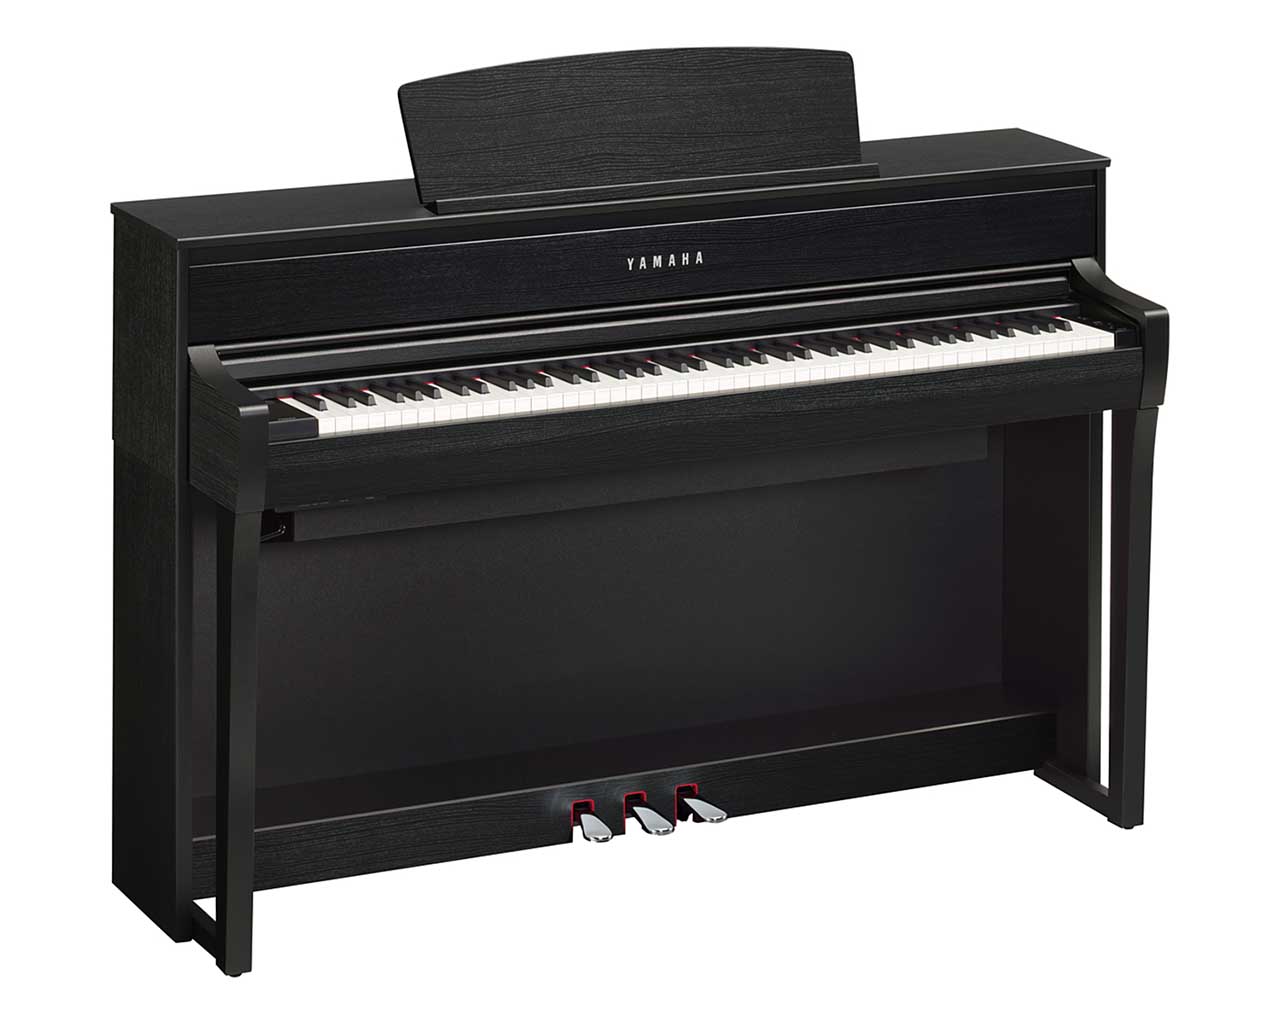 Yamaha-Clavinova-CLP-775-B-Digitalpiano-schwarz-Pianohaus-Filipski